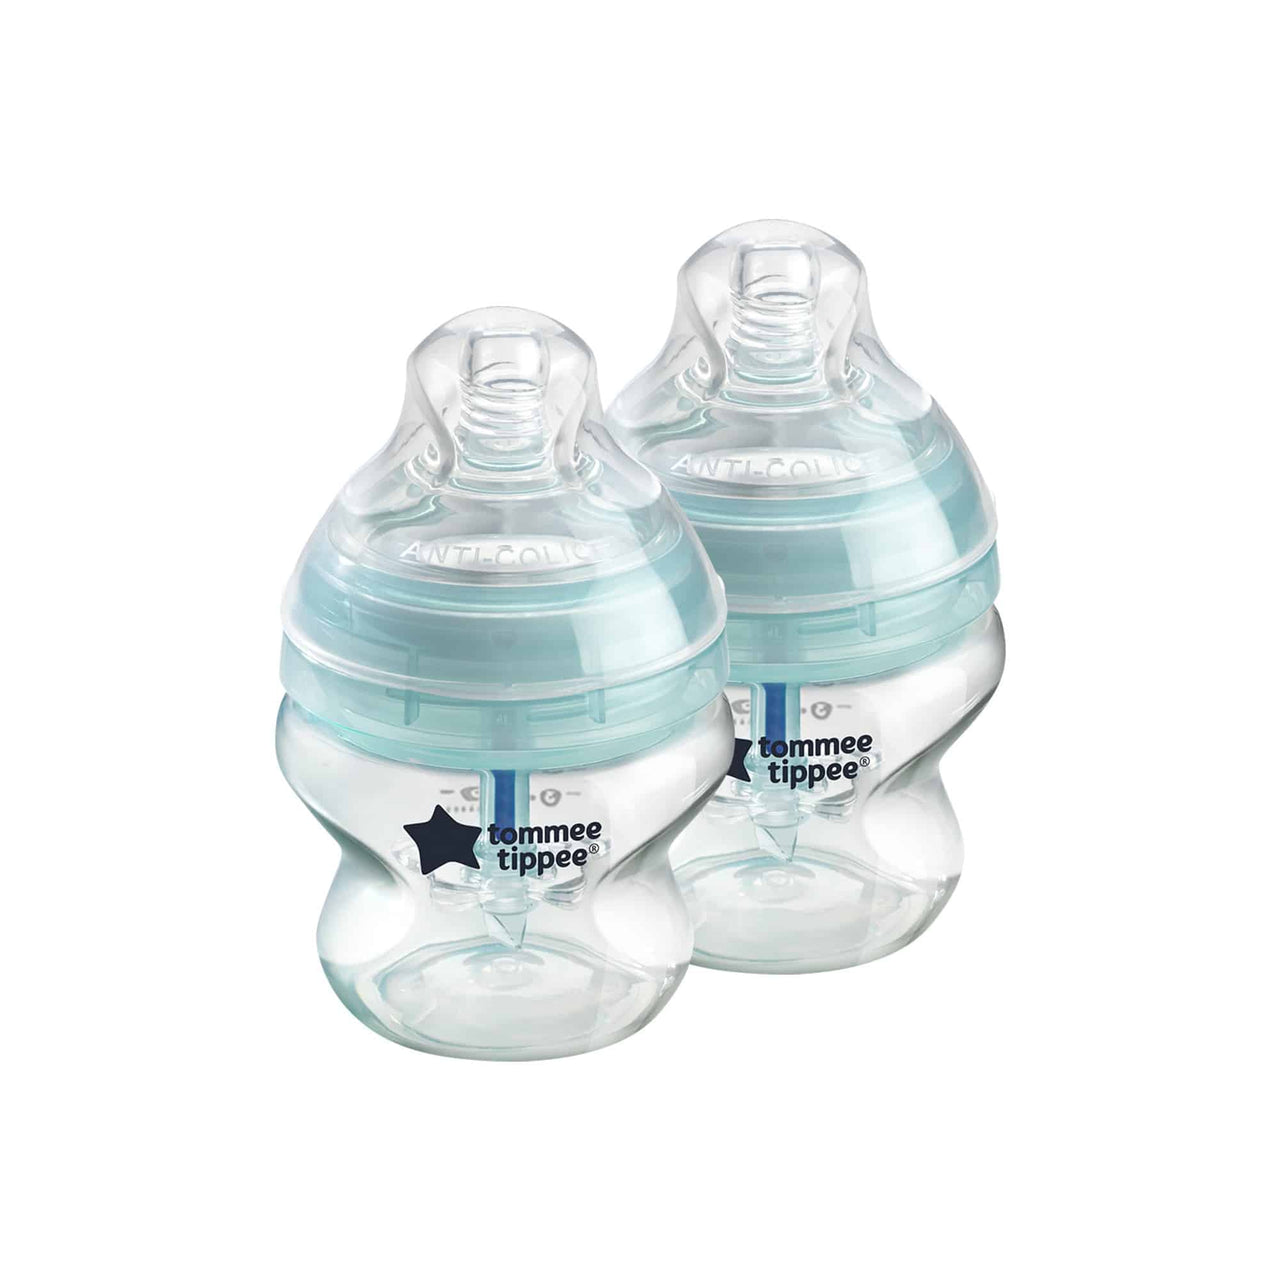 CTN Advanced Anti-colic Bottle 2 Pack